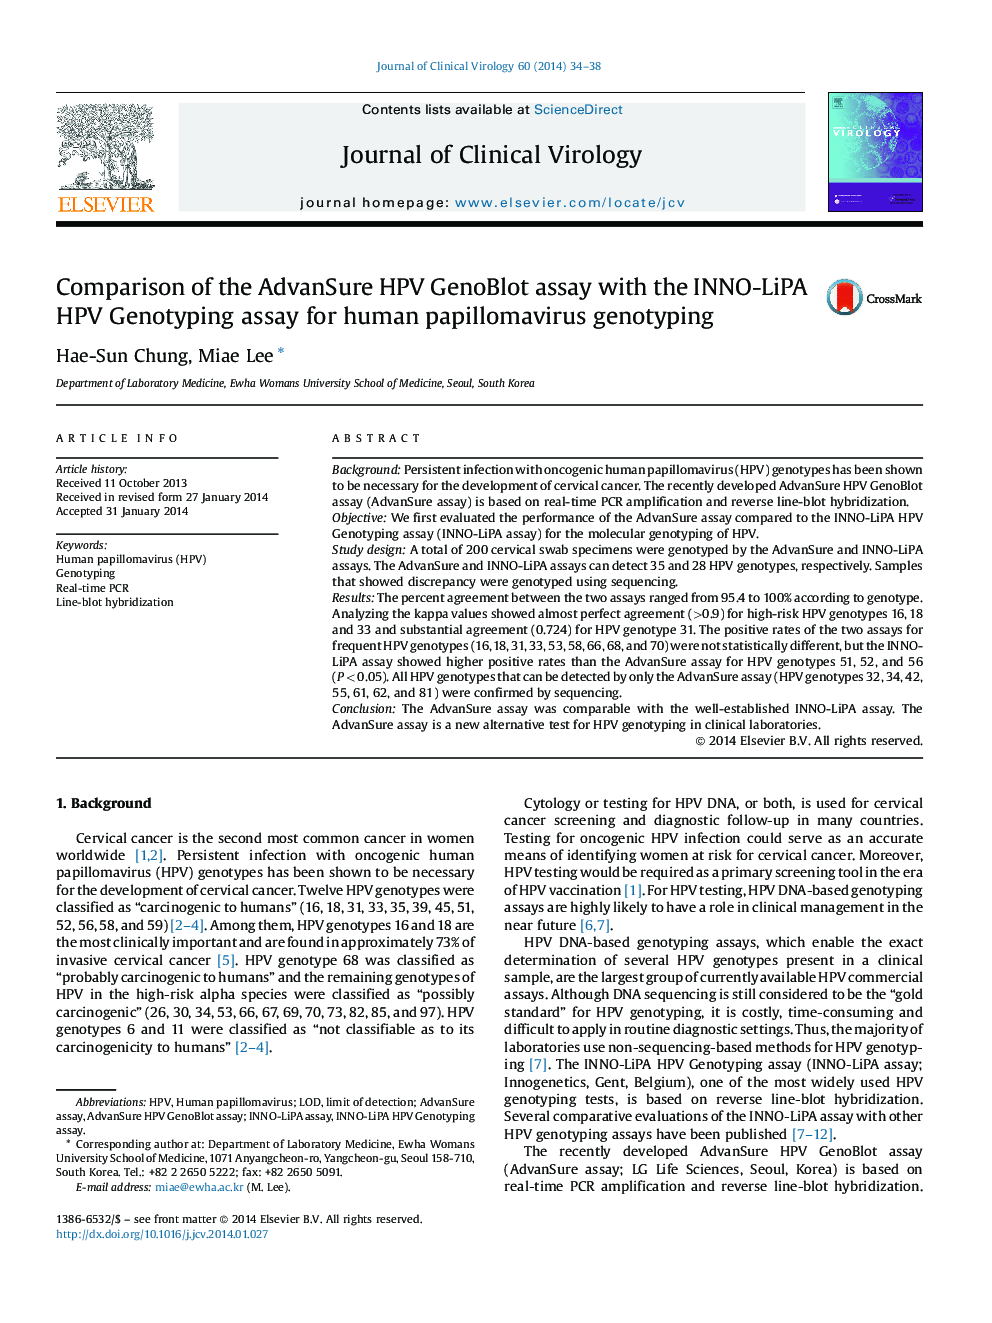 Comparison of the AdvanSure HPV GenoBlot assay with the INNO-LiPA HPV Genotyping assay for human papillomavirus genotyping